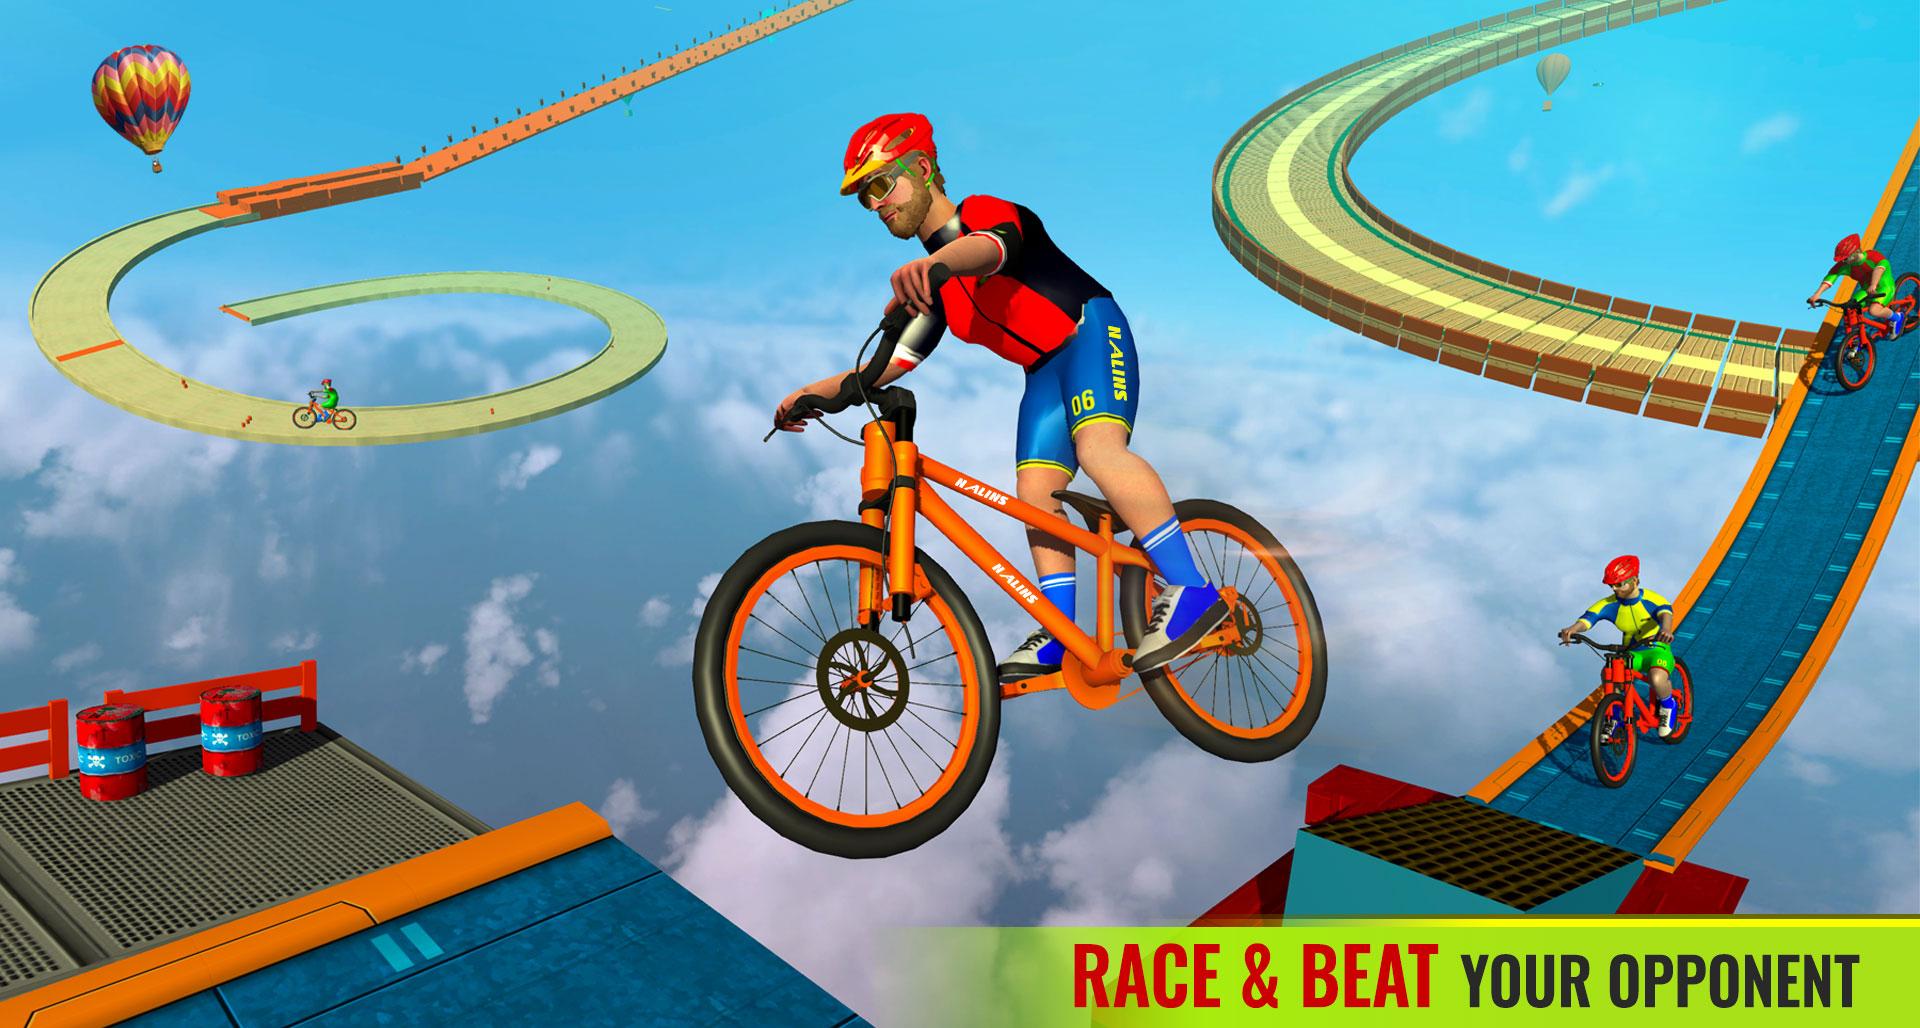 BMX Cycle Wala Game para Android - Screen 2.jpg?fakeurl=1&type=